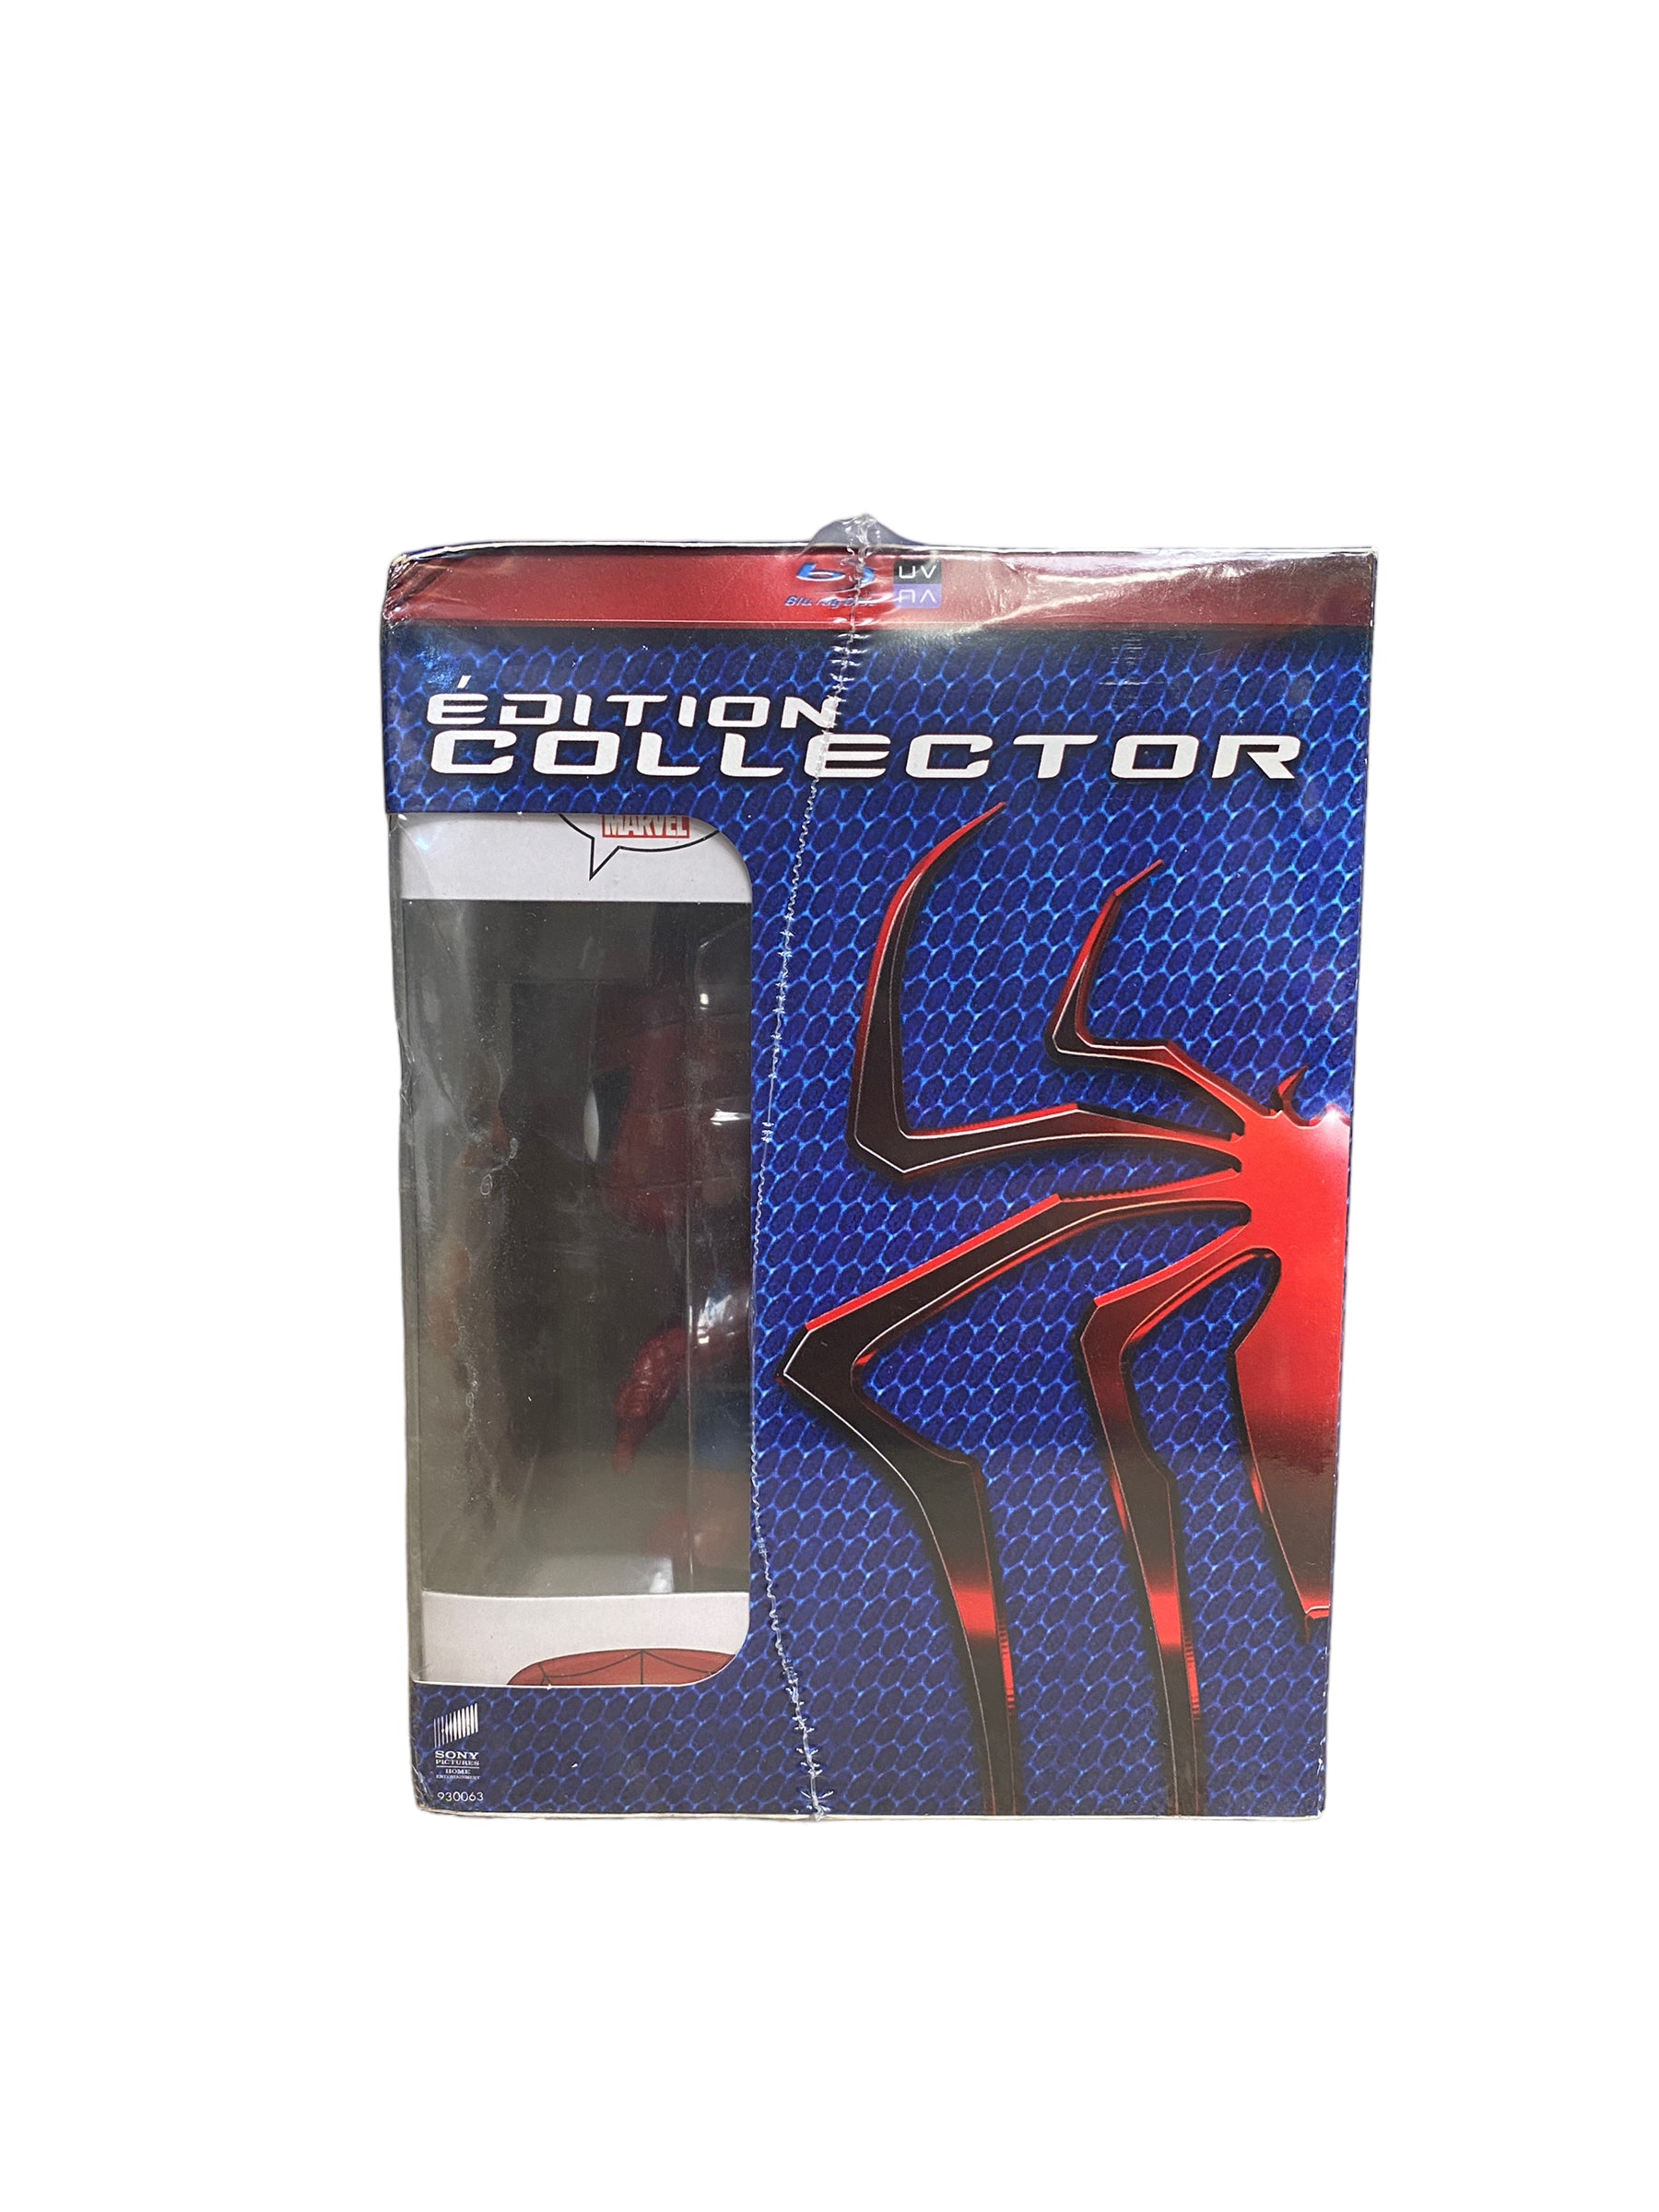 The Amazing Spider-Man 1 + 2 Funko Pop Blu-ray Bundle - Marvel - Sealed - Condition 7/10